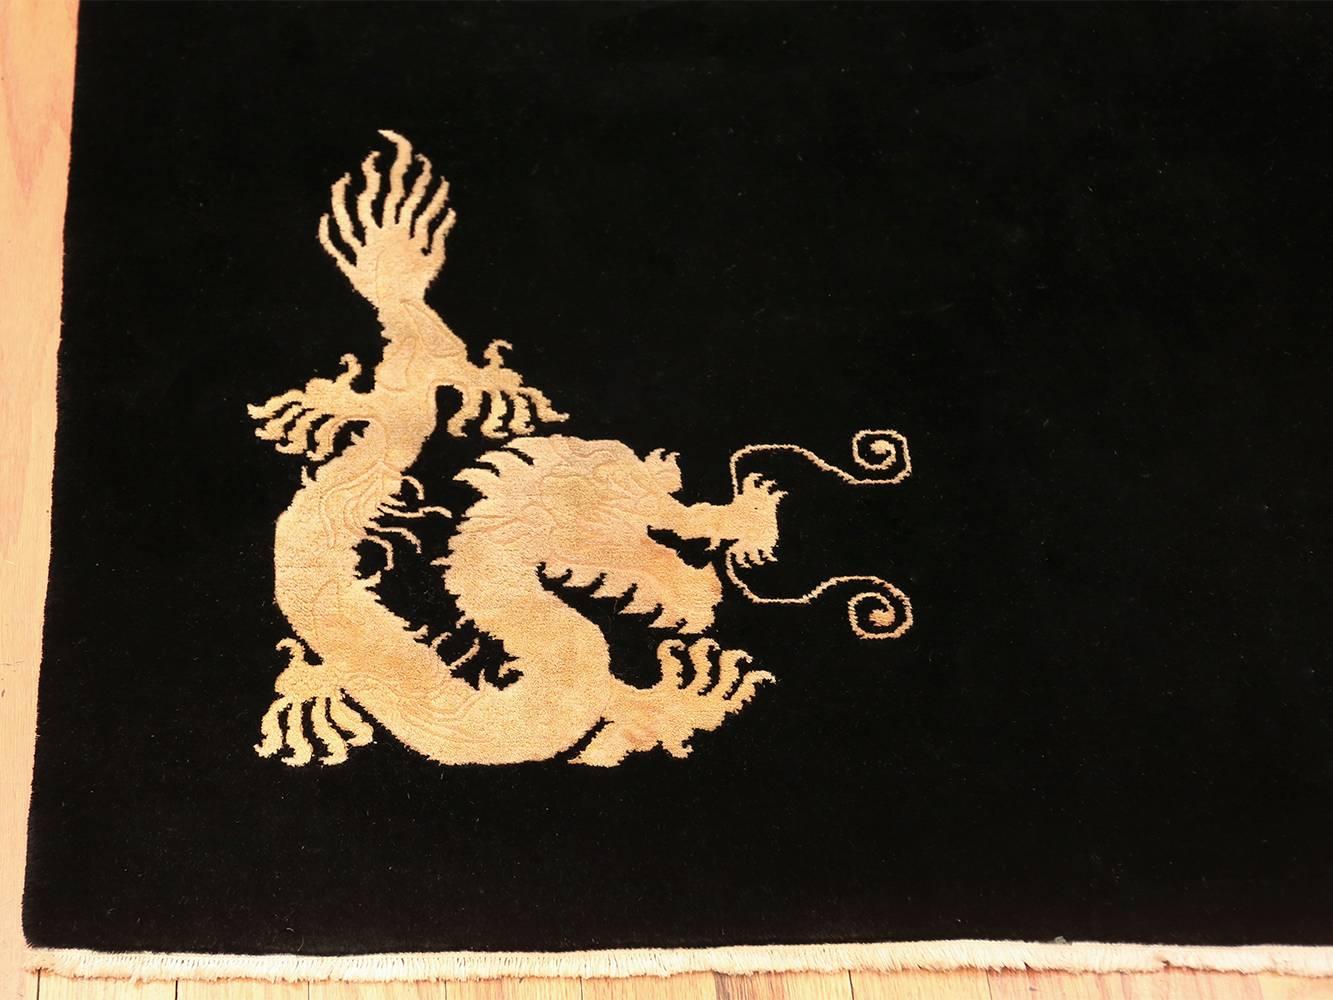 Benevolent Five Clawed Dragon Design Black Antique Chinese Rug. Size: 7' x 9' 6